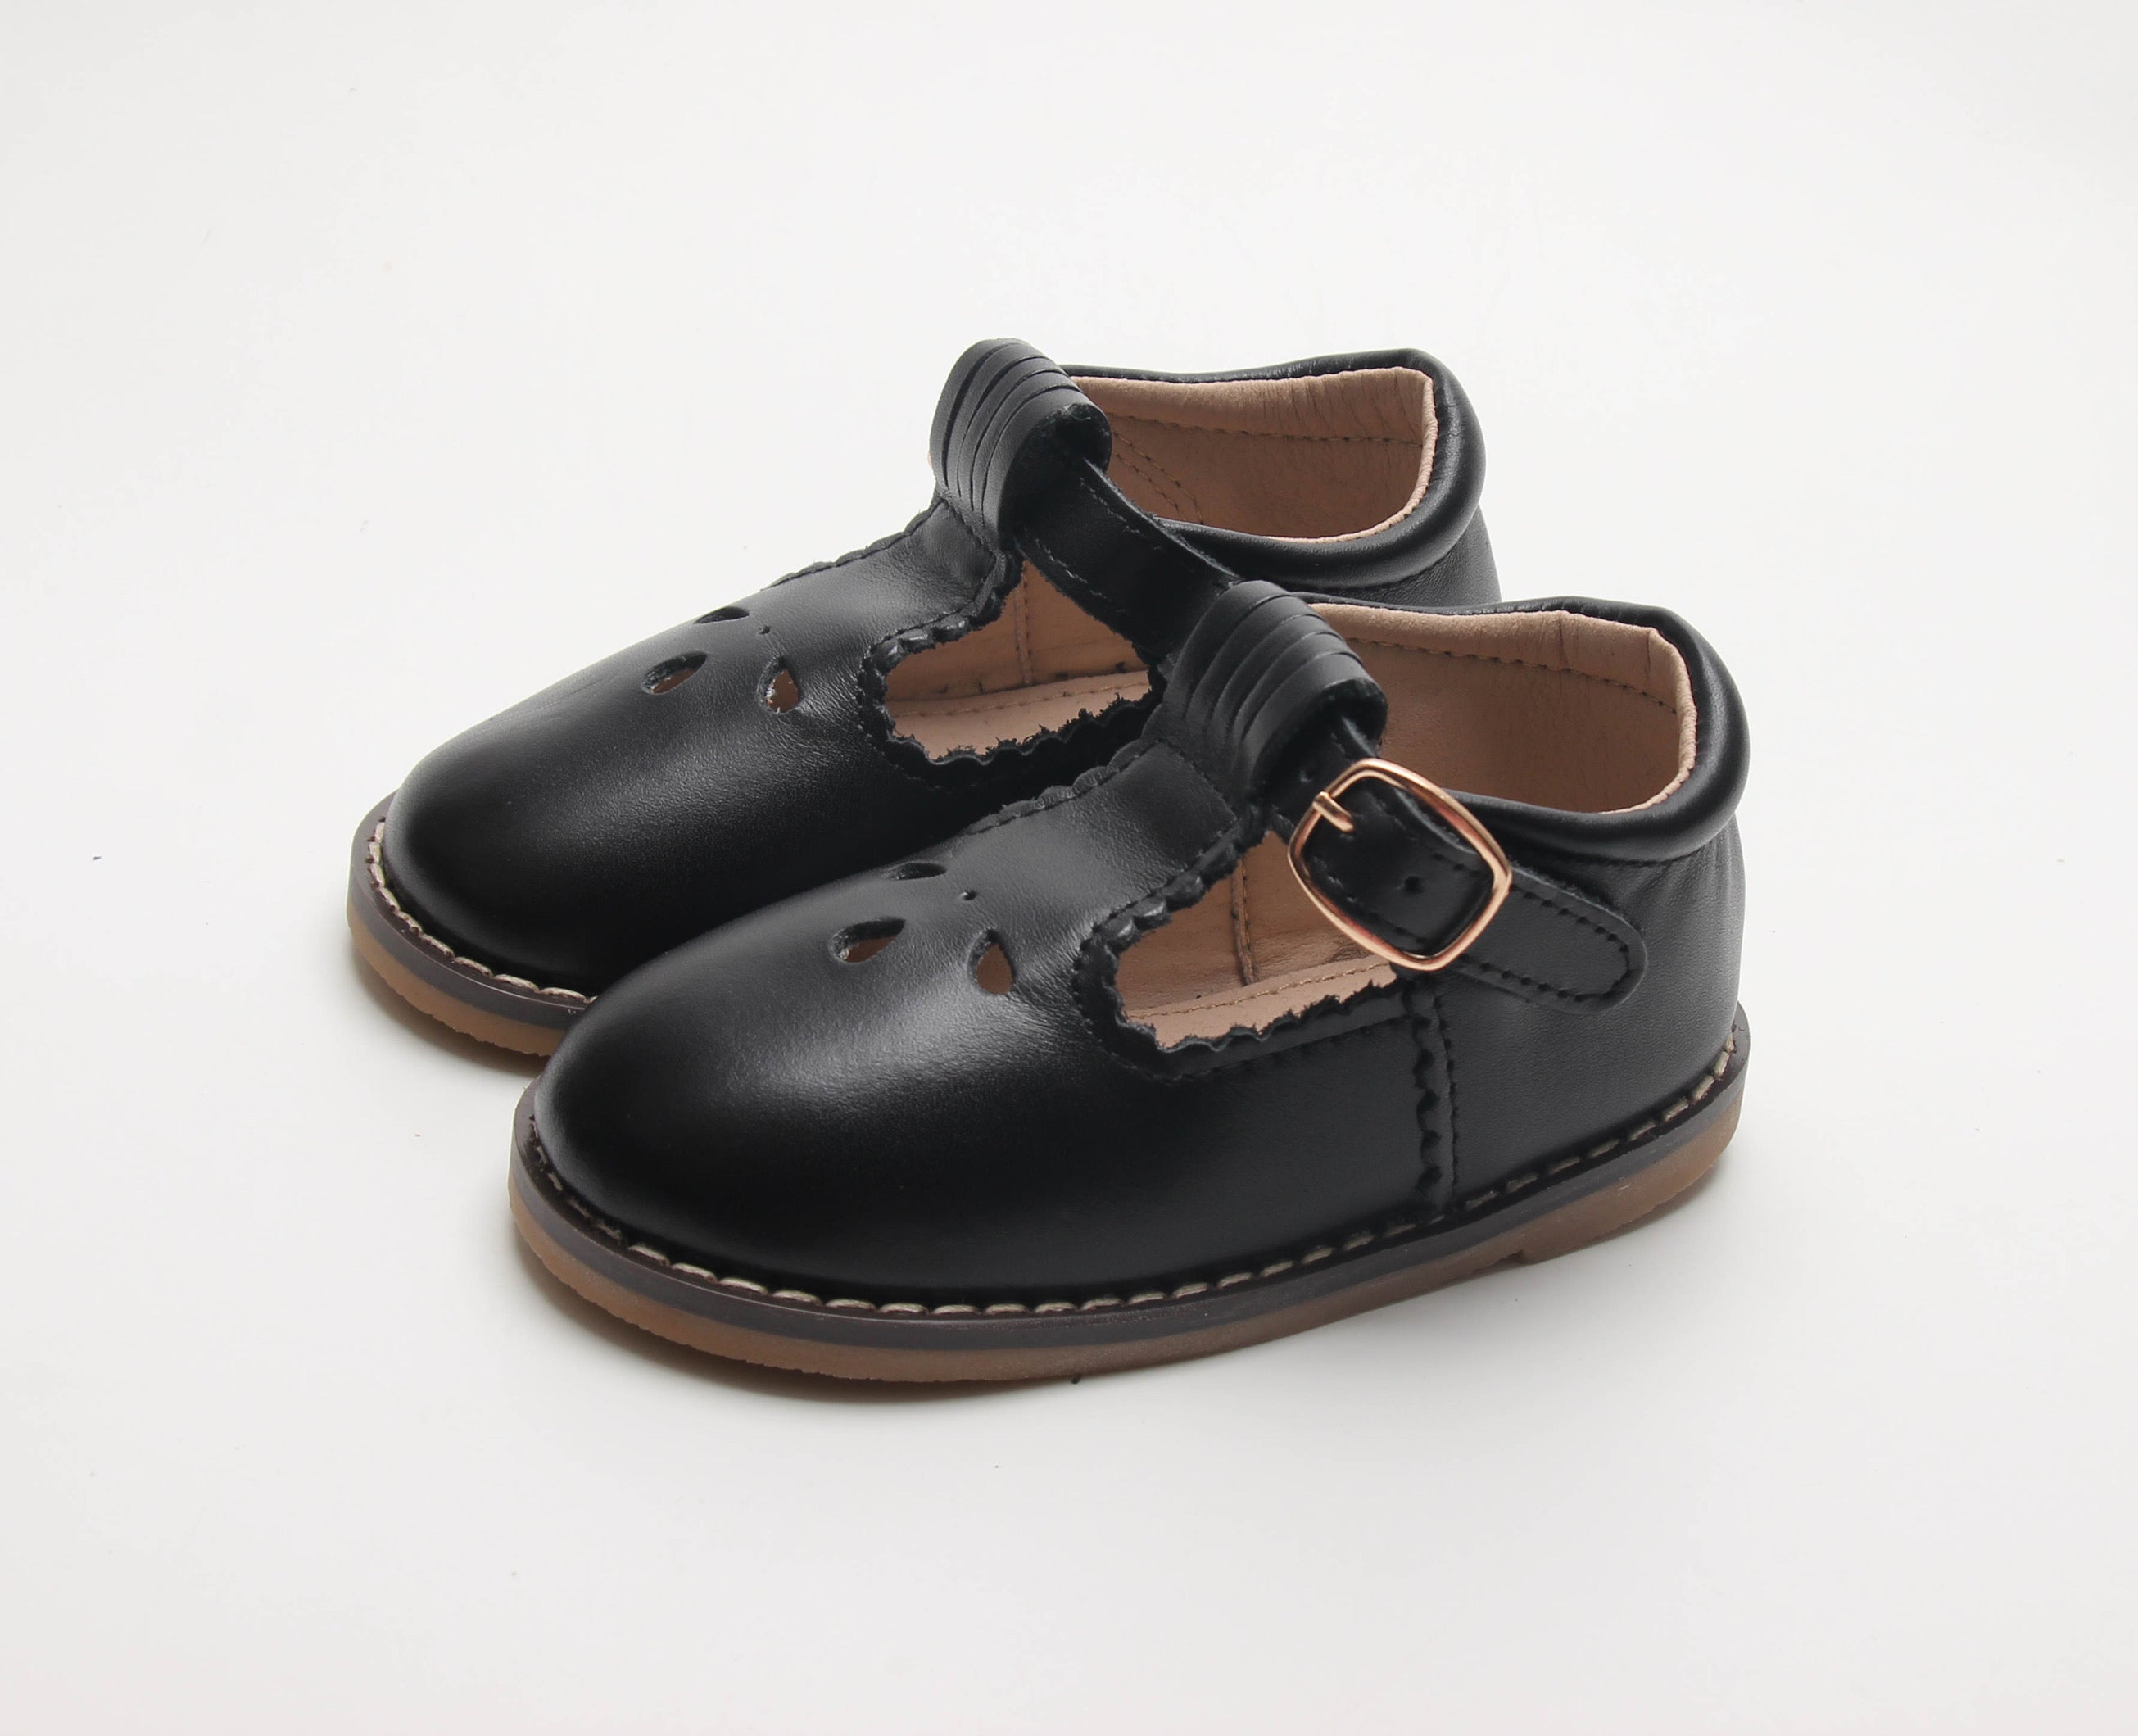 Black hard sole shoes